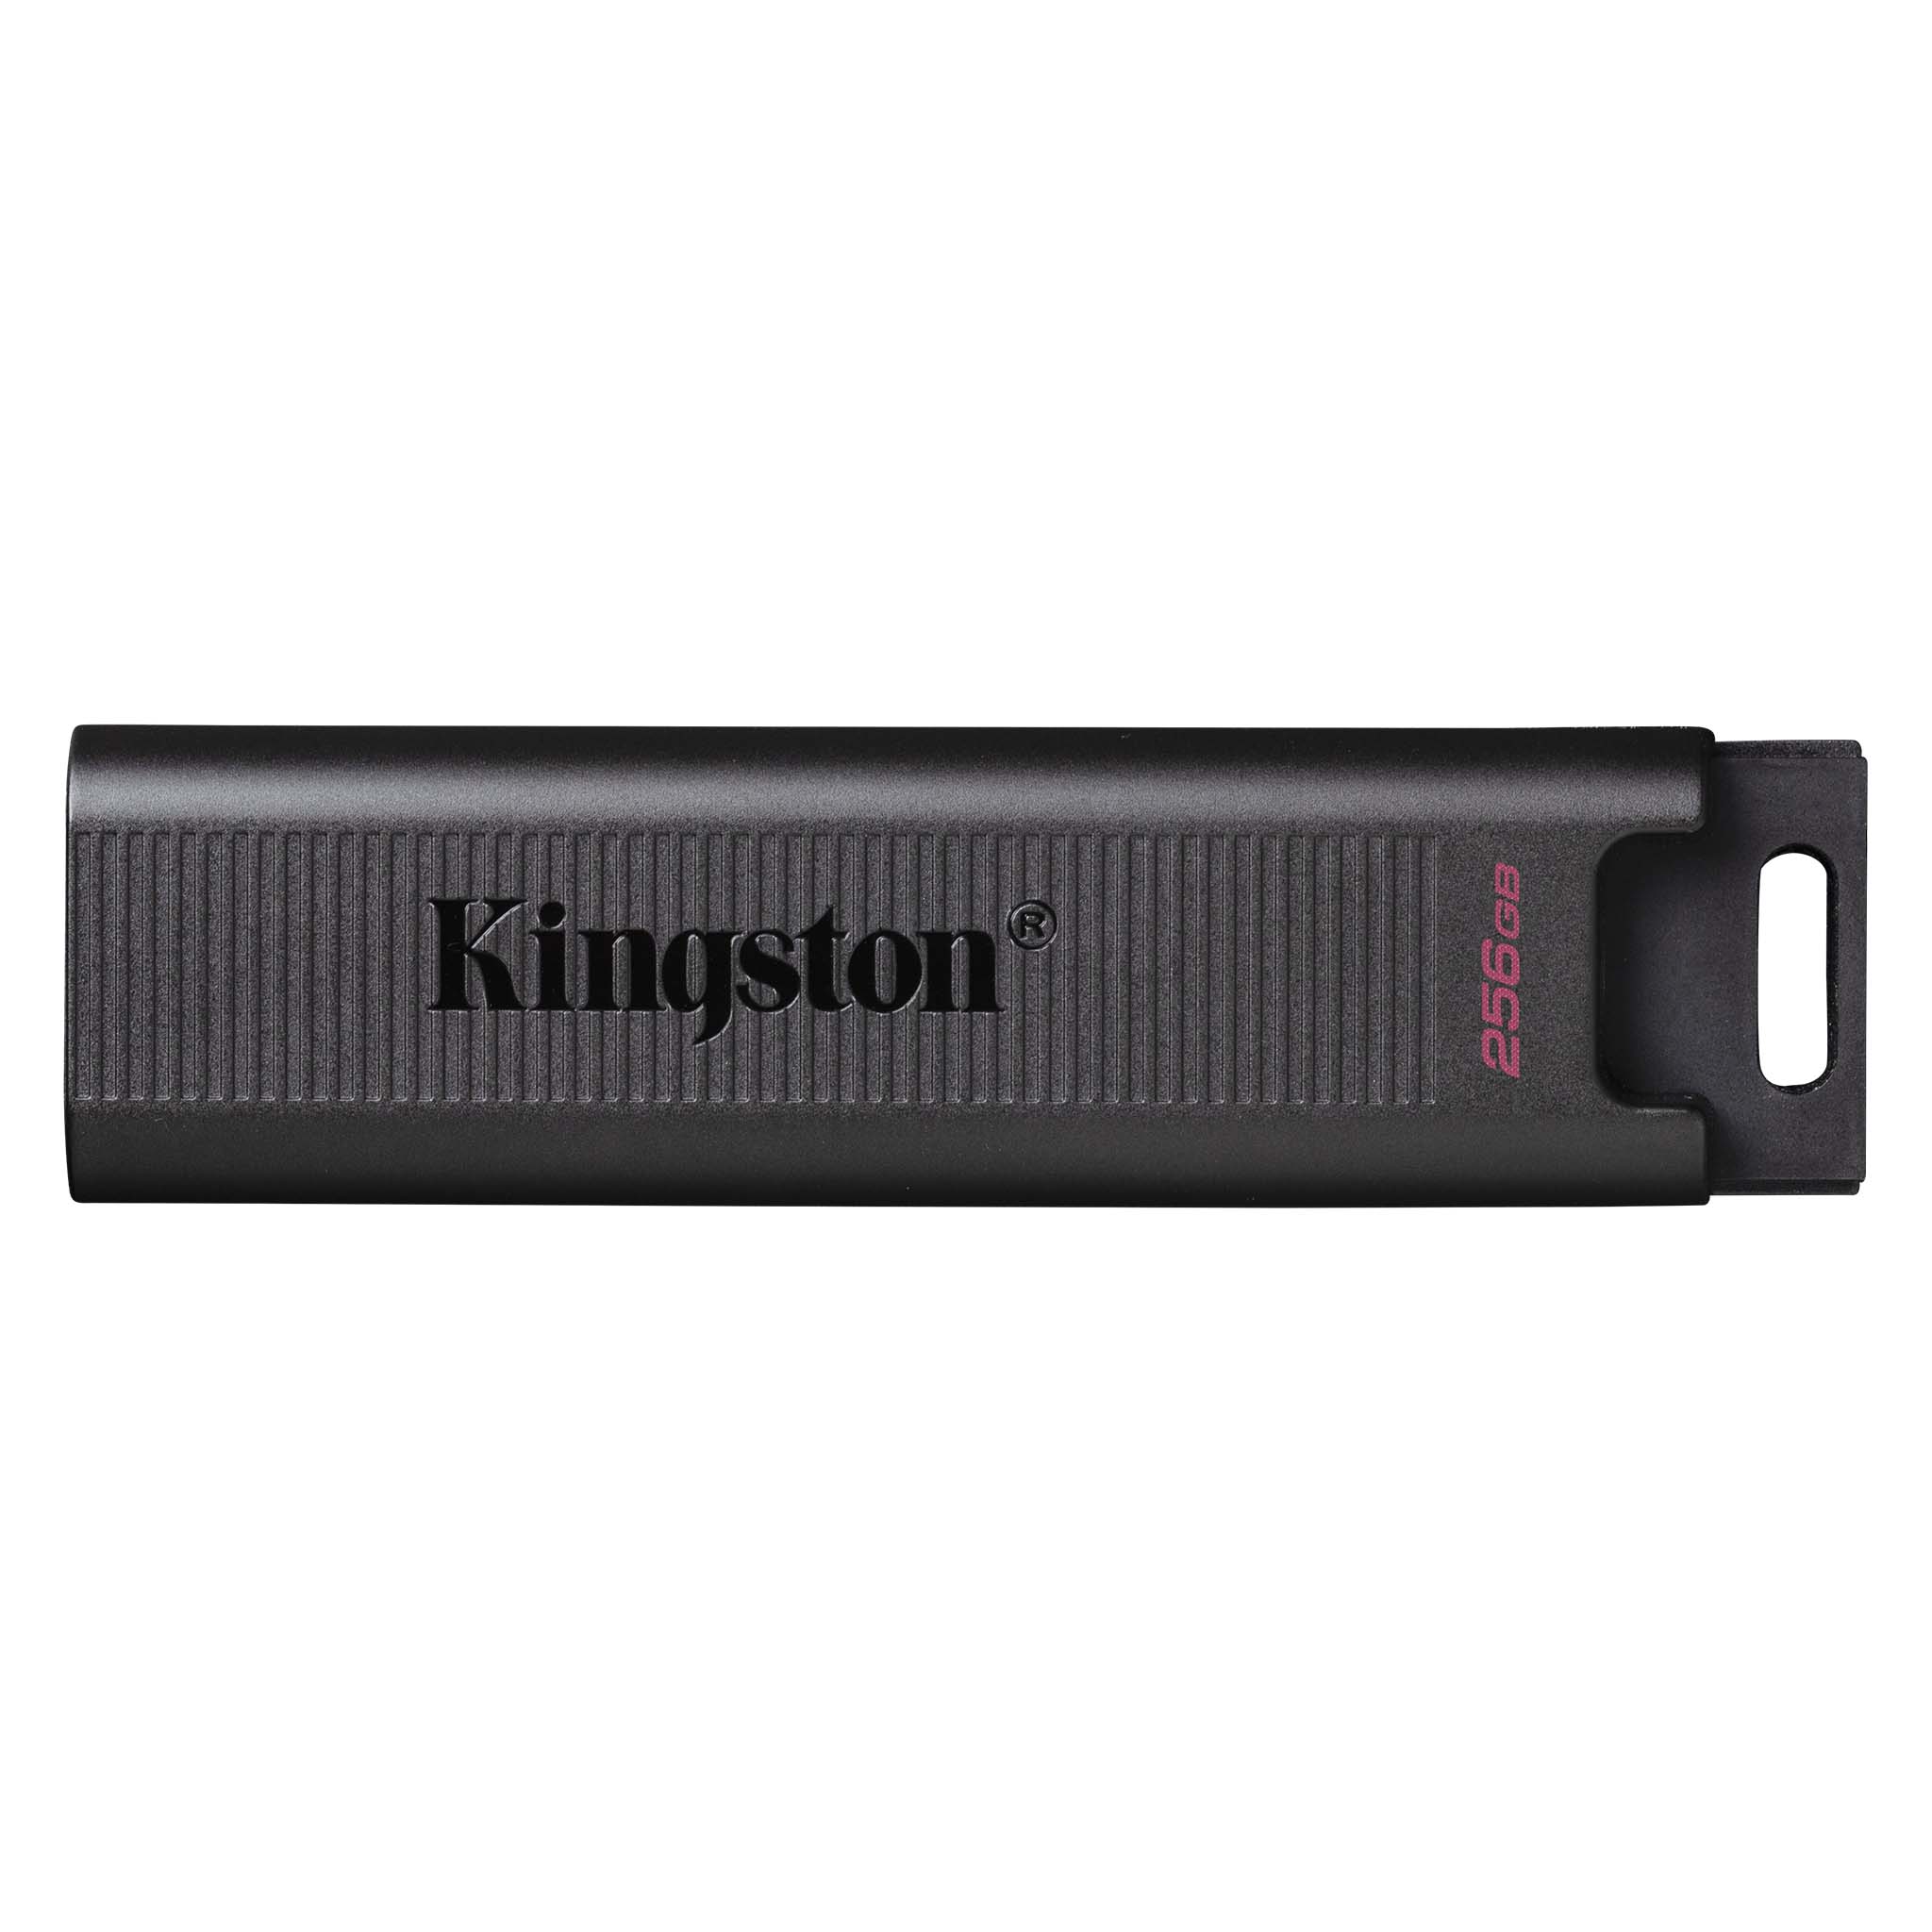 DataTraveler Max - USB 3.2 Gen 2 Flash Drive - Kingston Technology